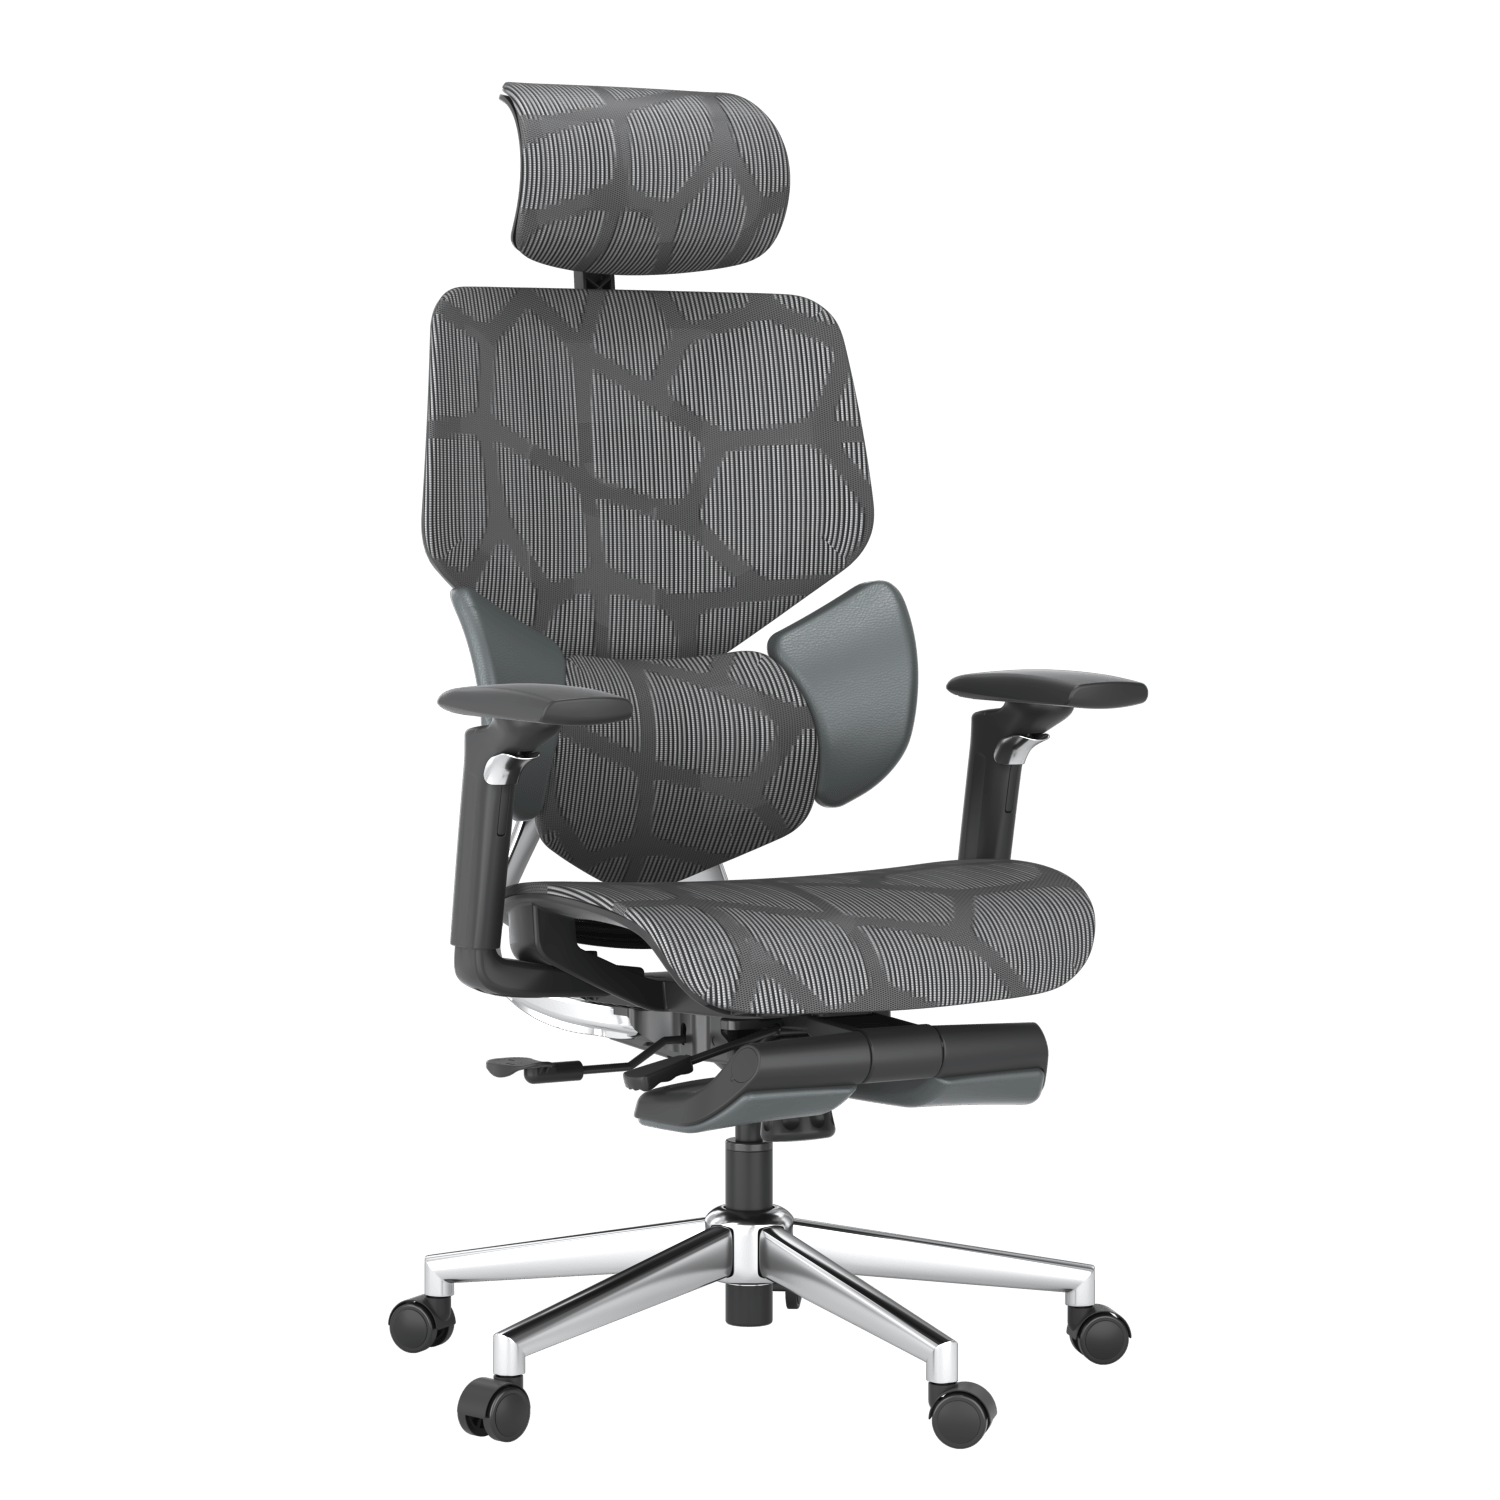 HBADA E3 ergonomic office chair--Black